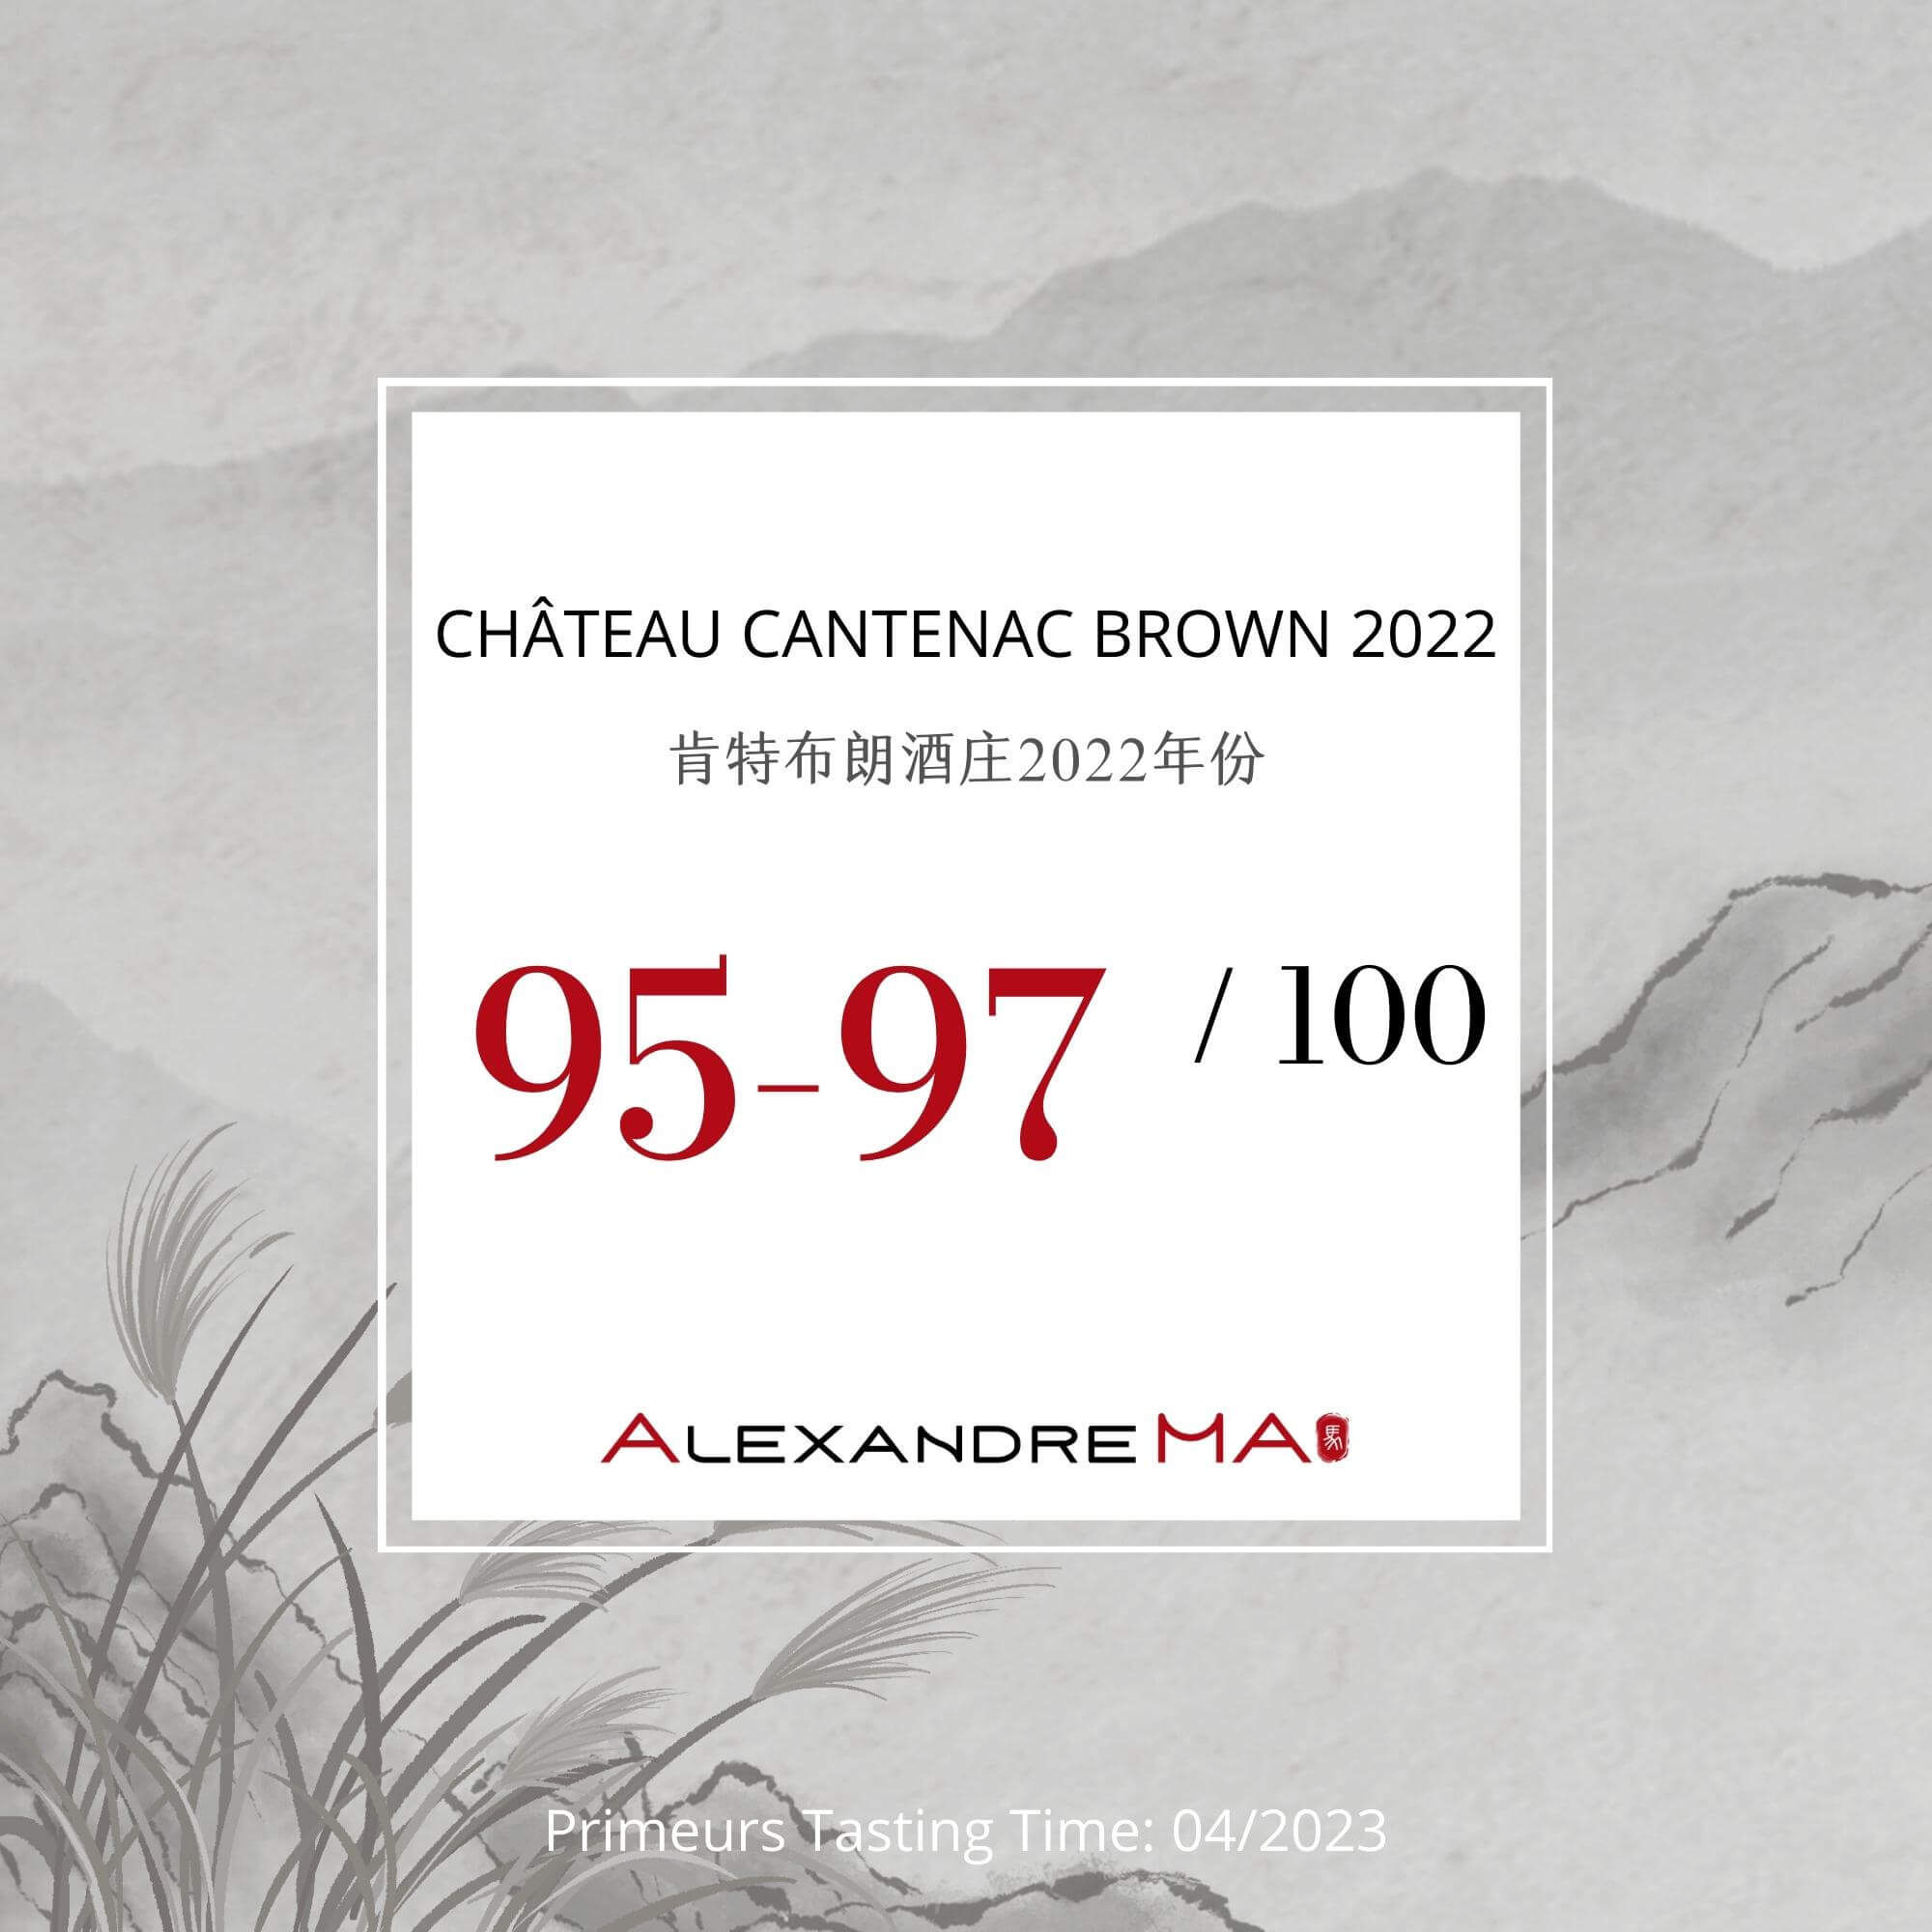 Château Cantenac Brown 2022 Primeurs - Alexandre MA